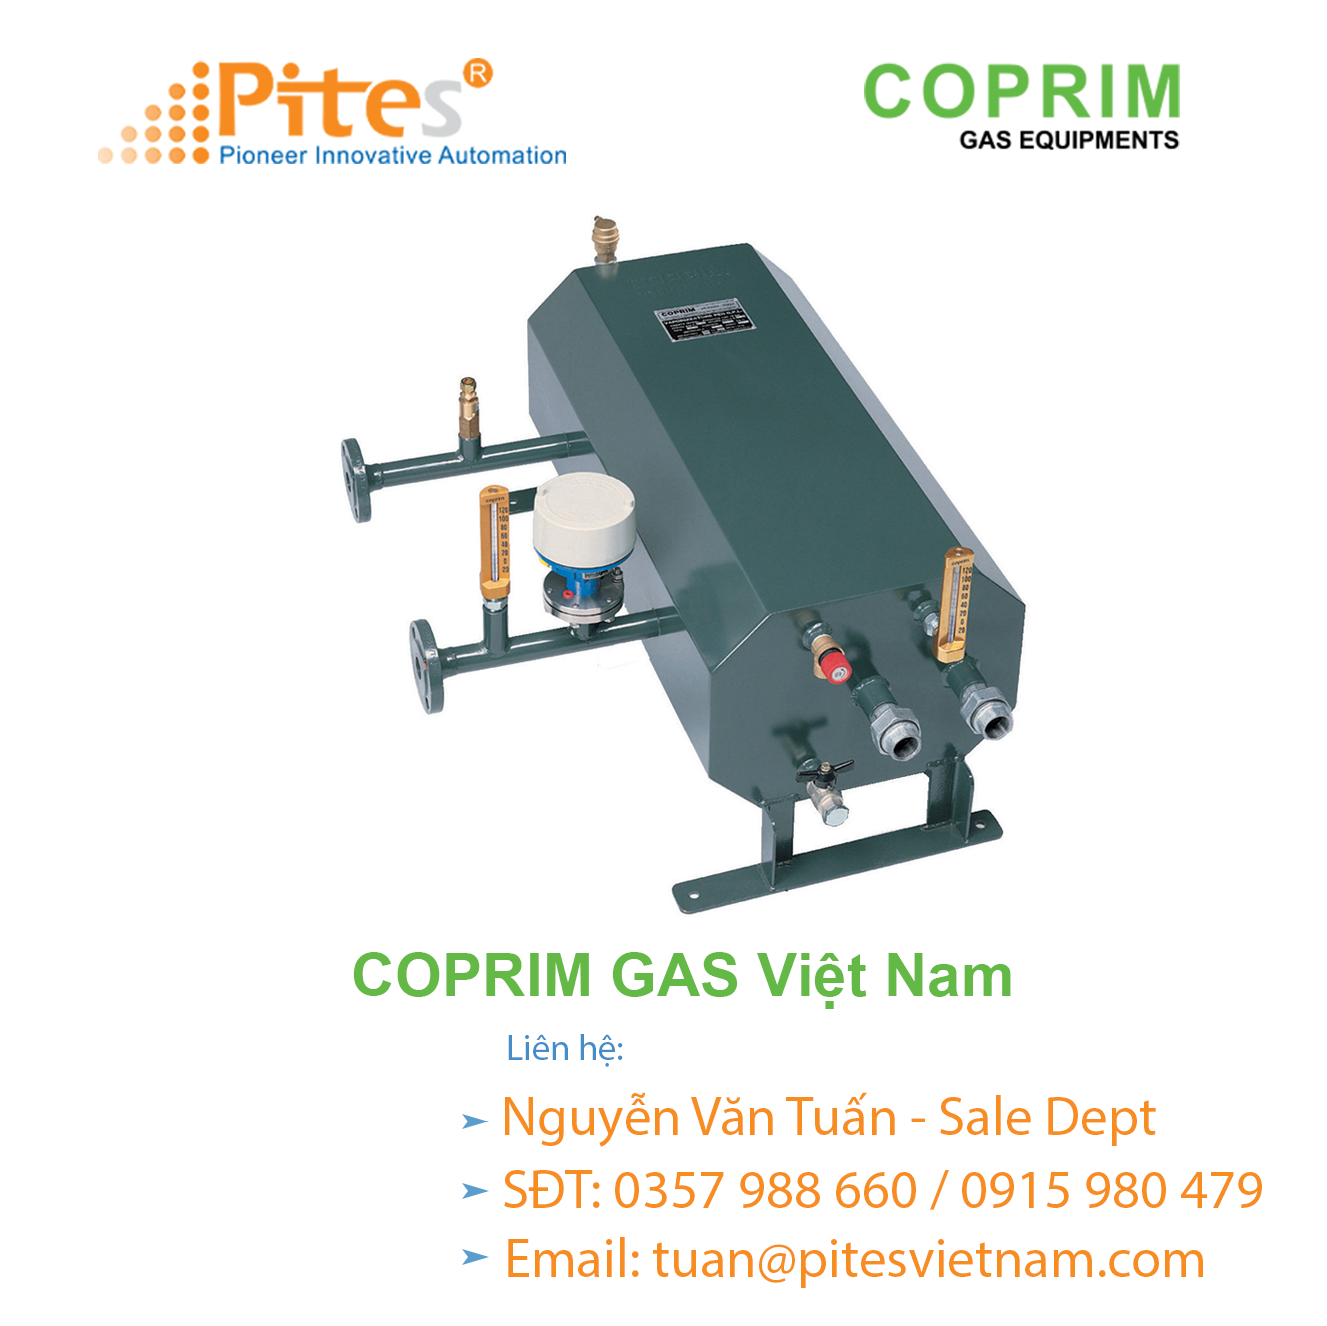 coprim-gas-vietnam-coprim-gas-viet-nam-dai-ly-coprim-gas-list-code-coprim-gas-part-5.png